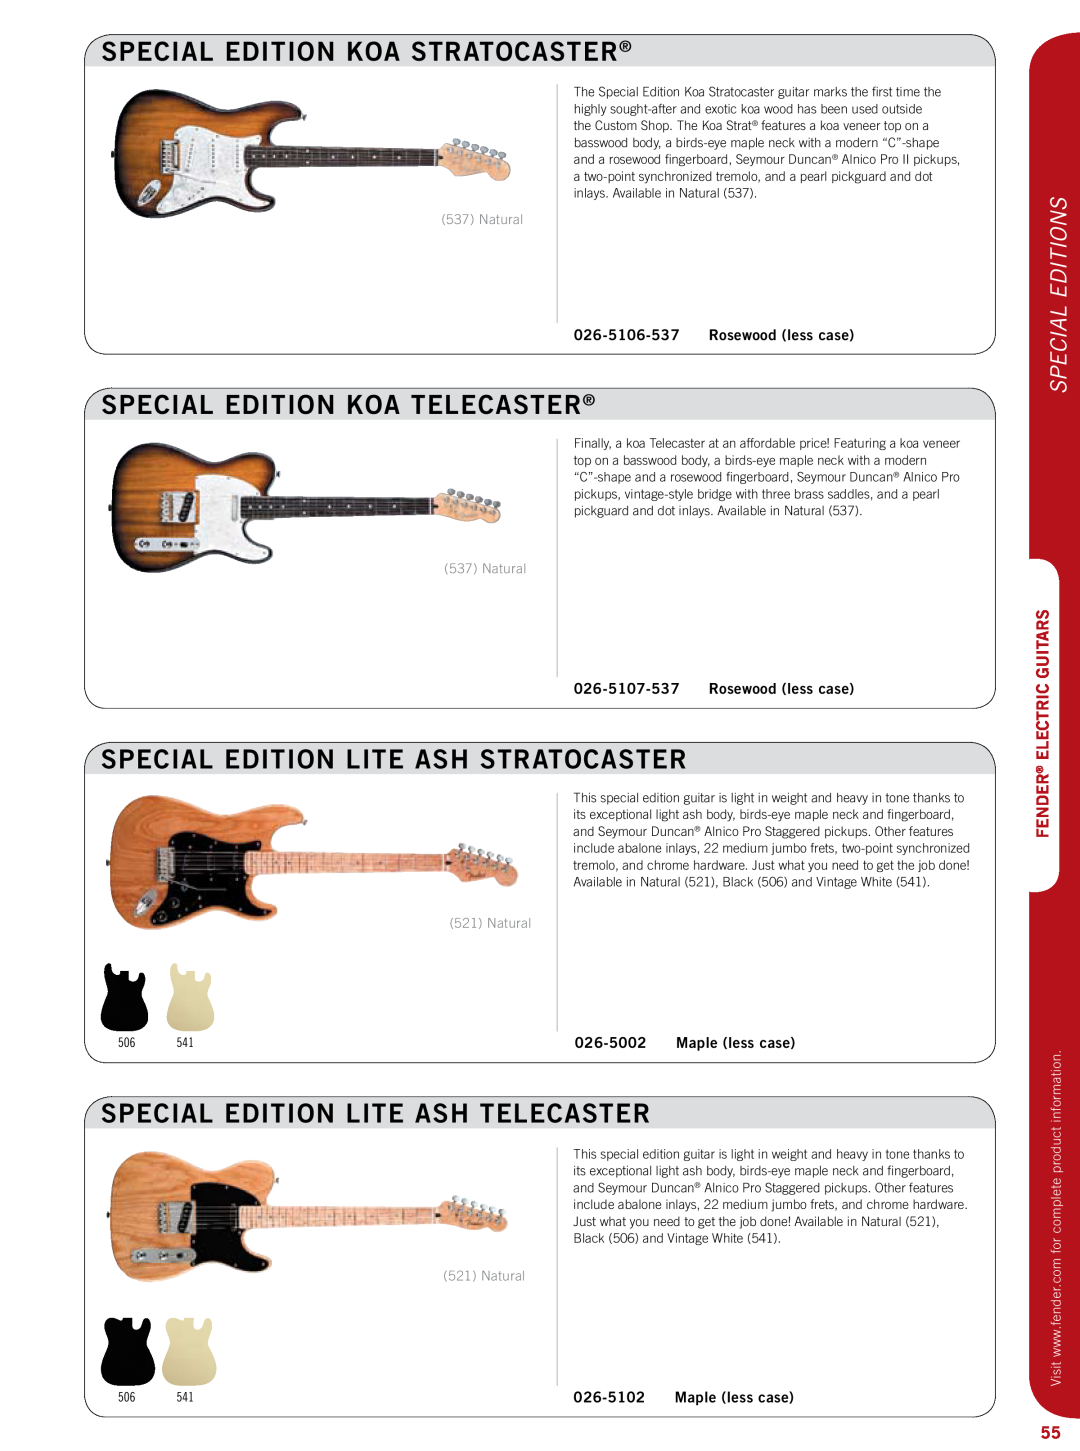 Fender 011-9600 special edition KOA STRATOCASTER, special edition KOA TELECASTER, special edition LITE ASH STRATOCASTER 